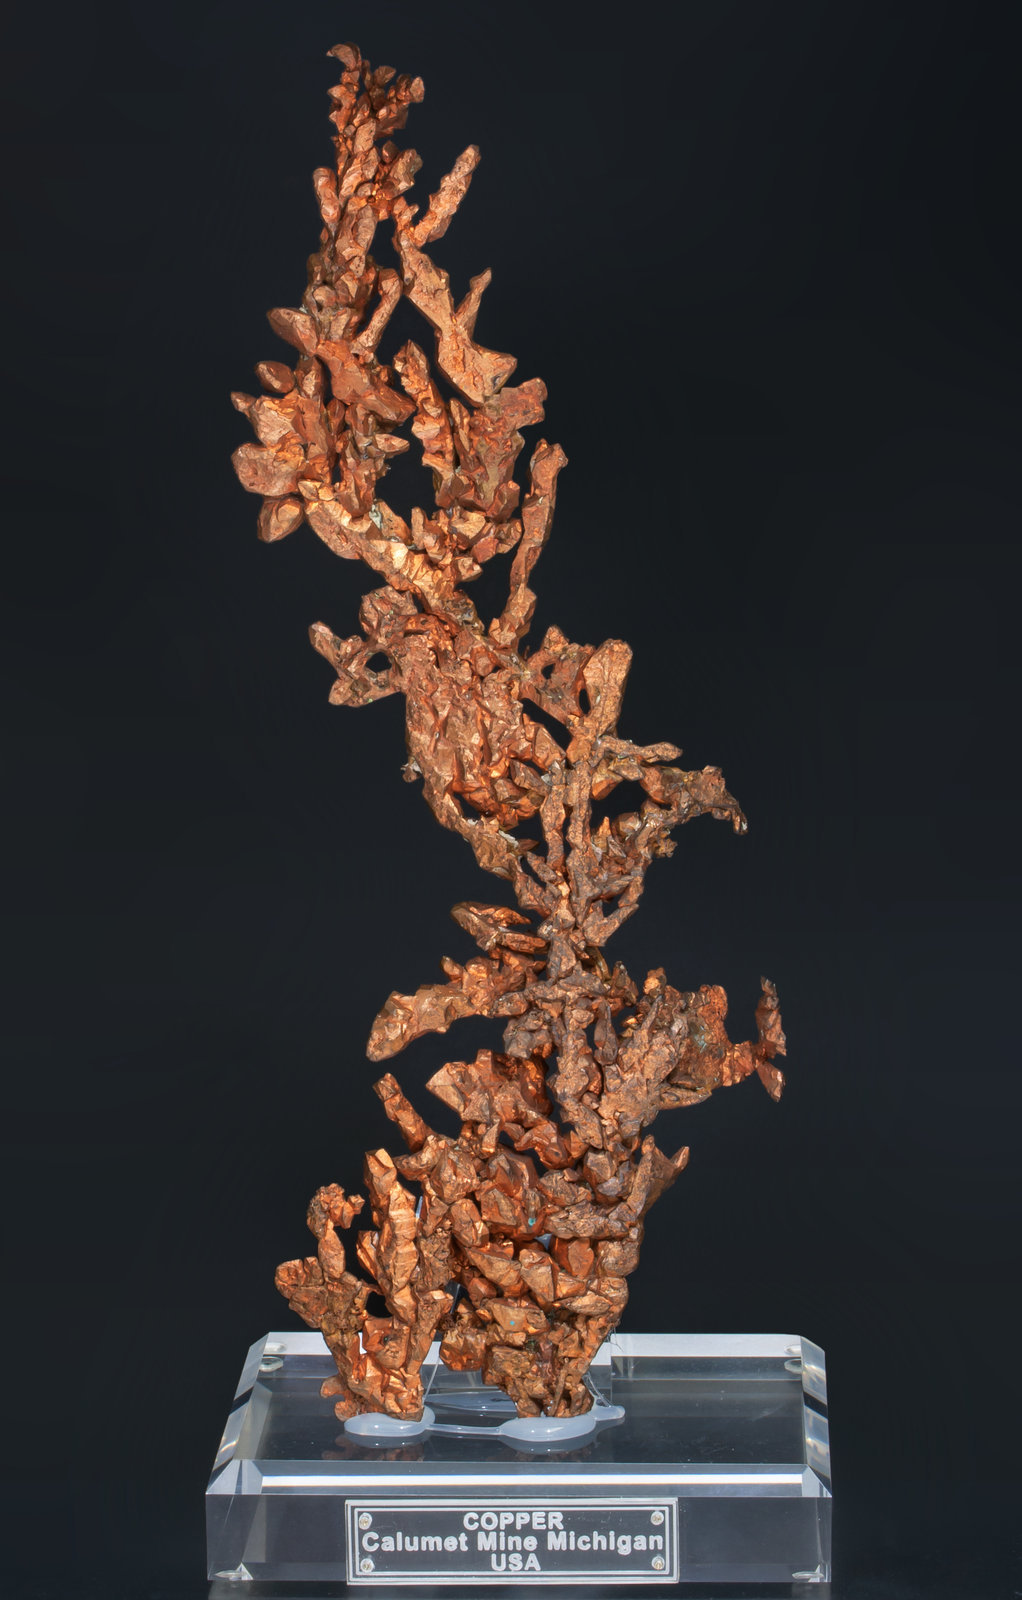 specimens/s_imagesAC2/Copper-MF98AC2f2.jpg